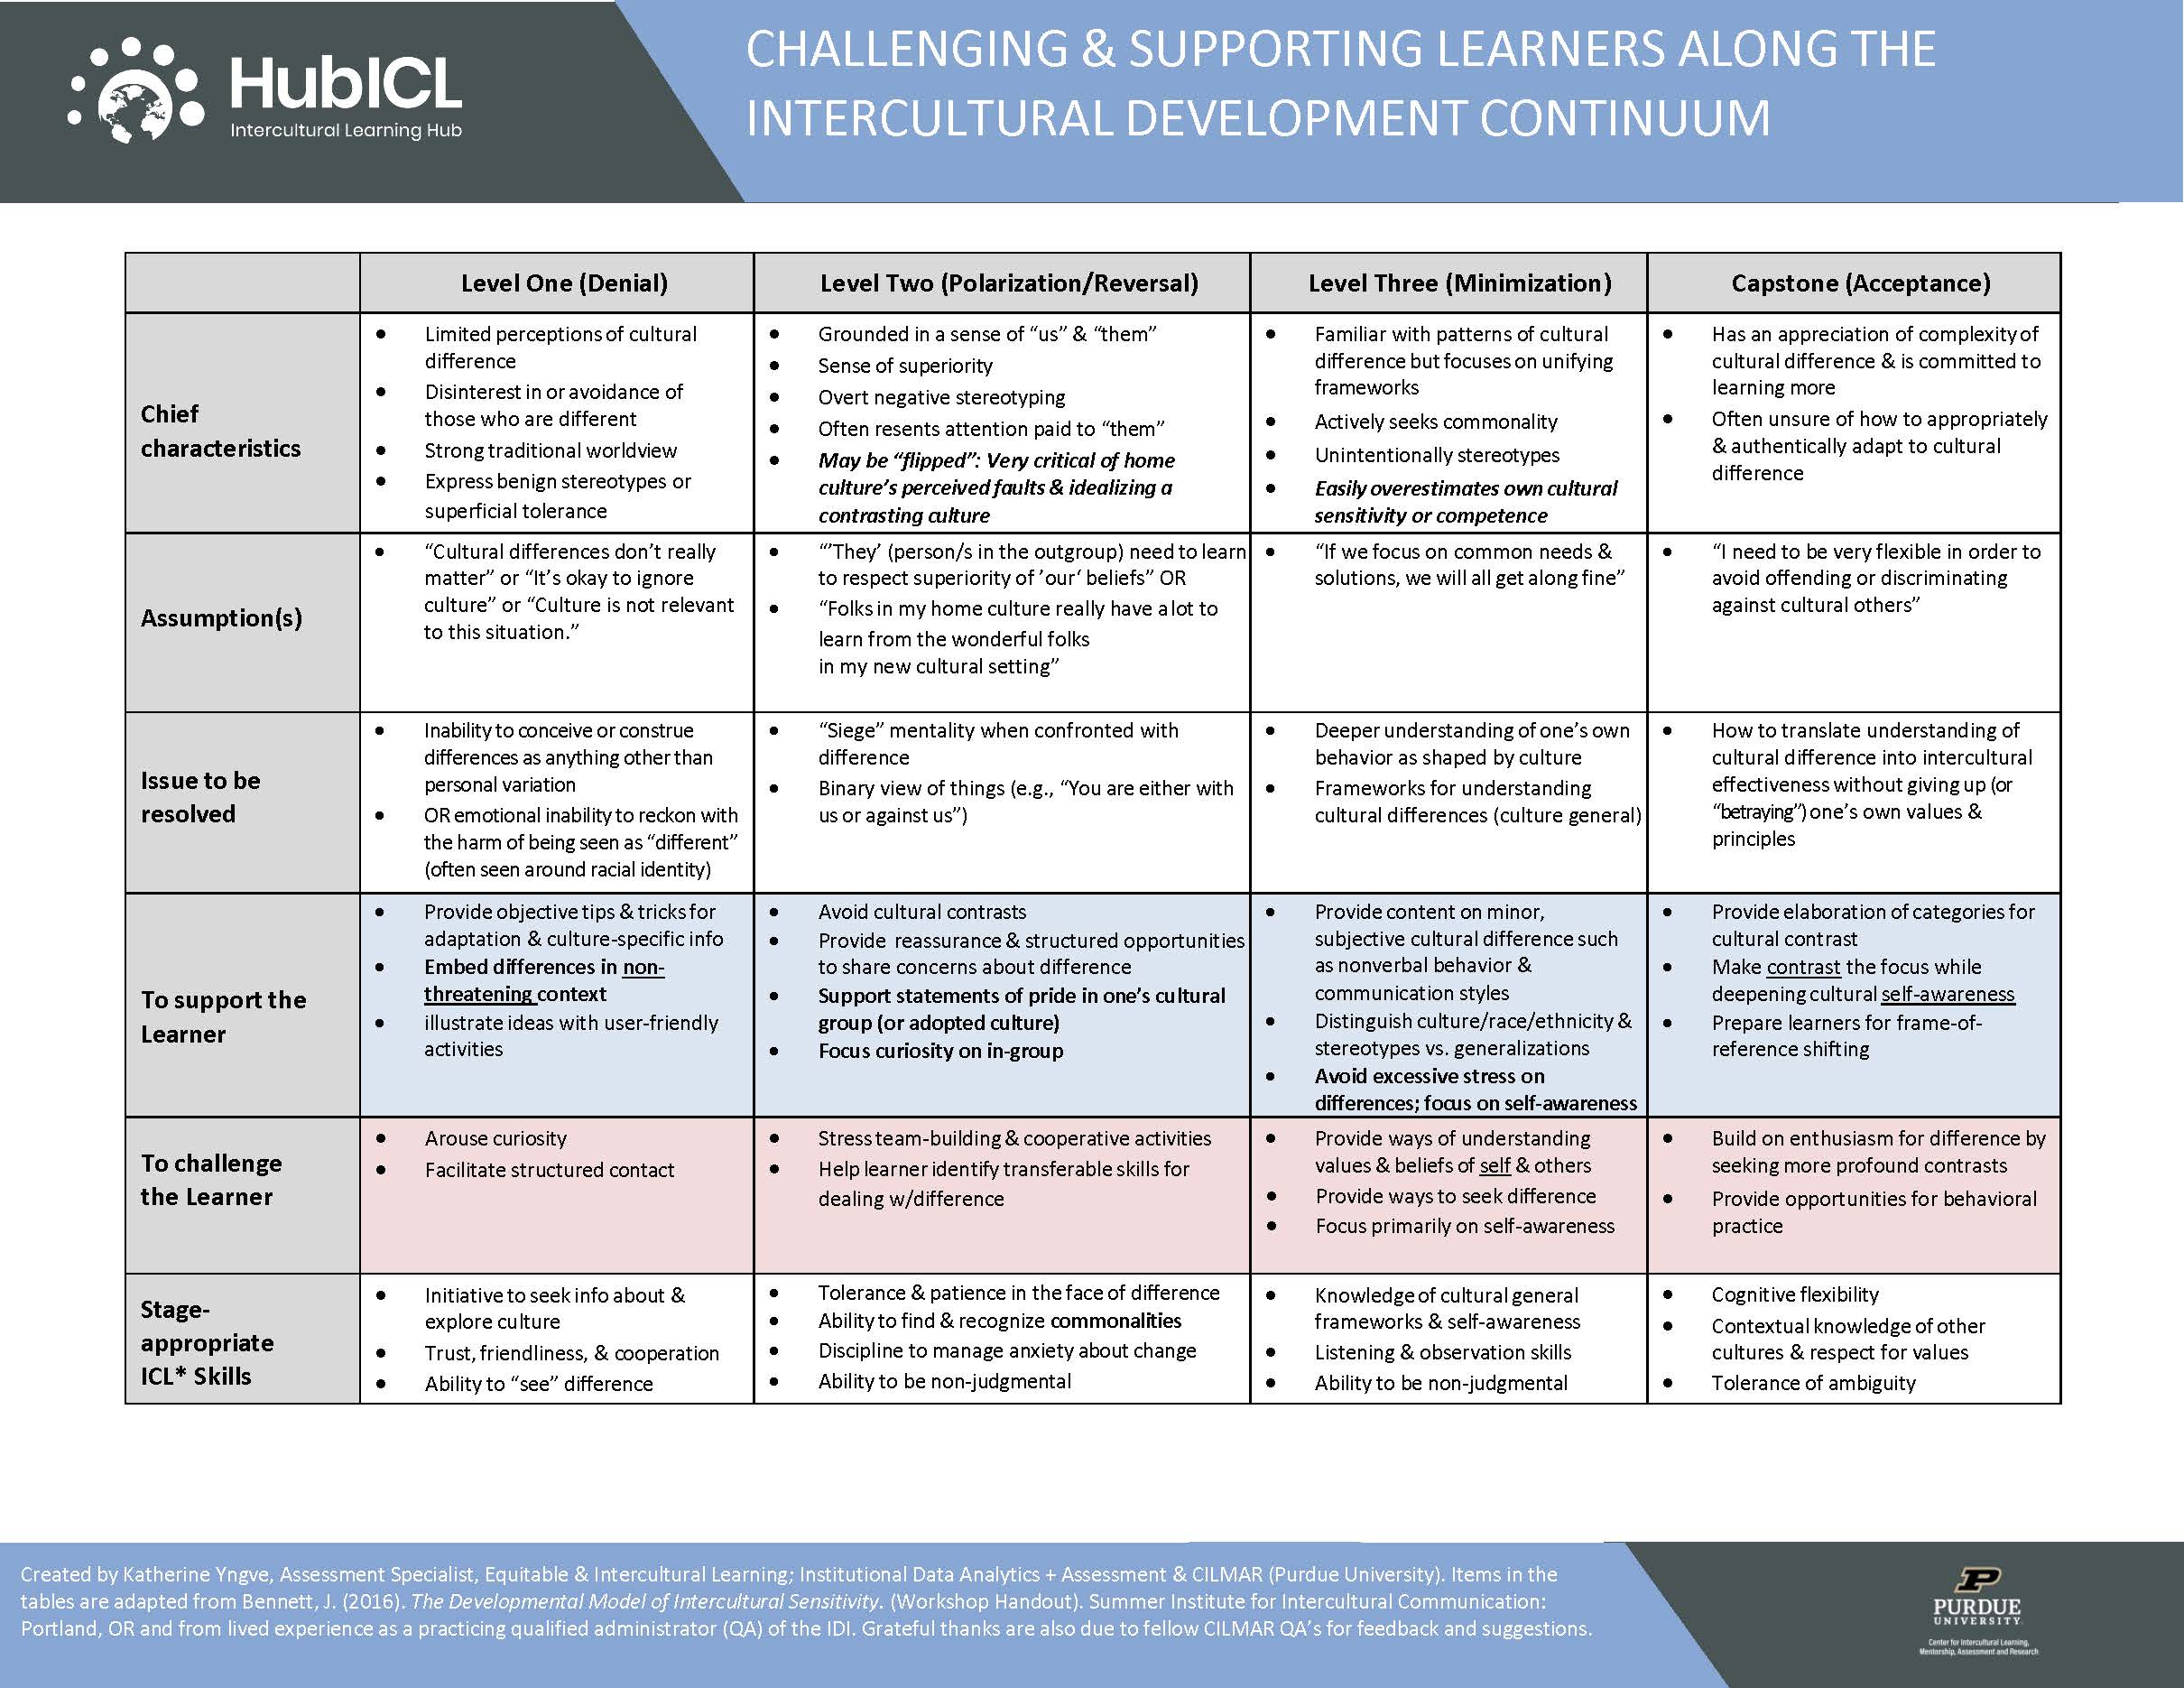 IDC learner challenge & support